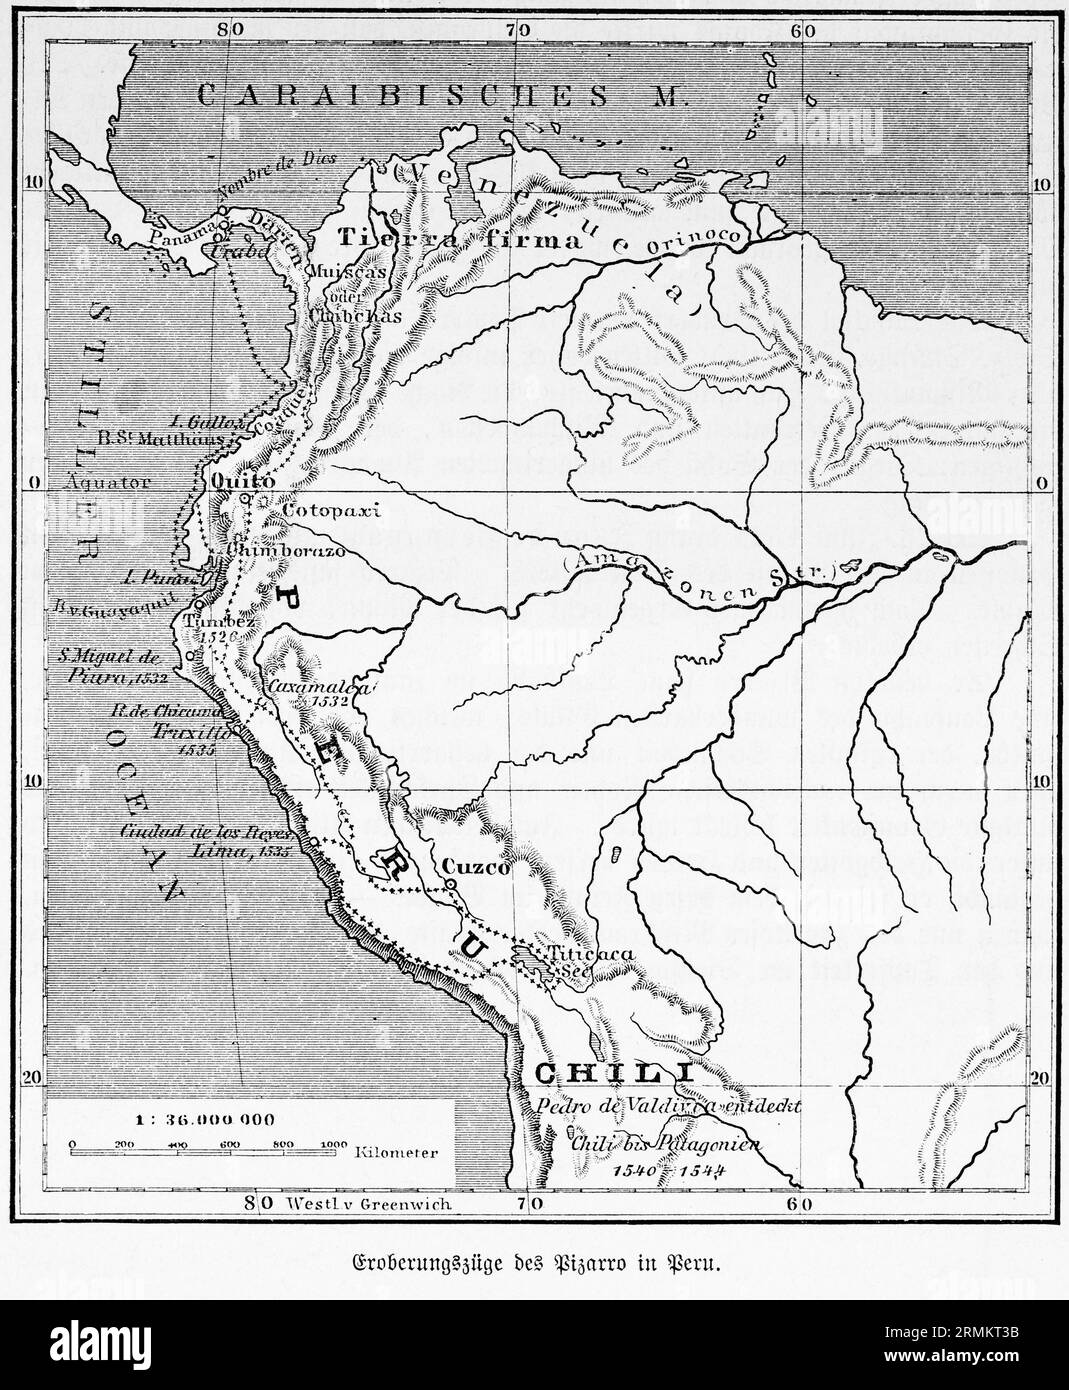 1:36.000.000, Conquest of Francisco Pizarro in Peru, beginning 16th century, Spanish conquest, campaign, colonialism, Amazonas, Caribbean Sea Stock Photo